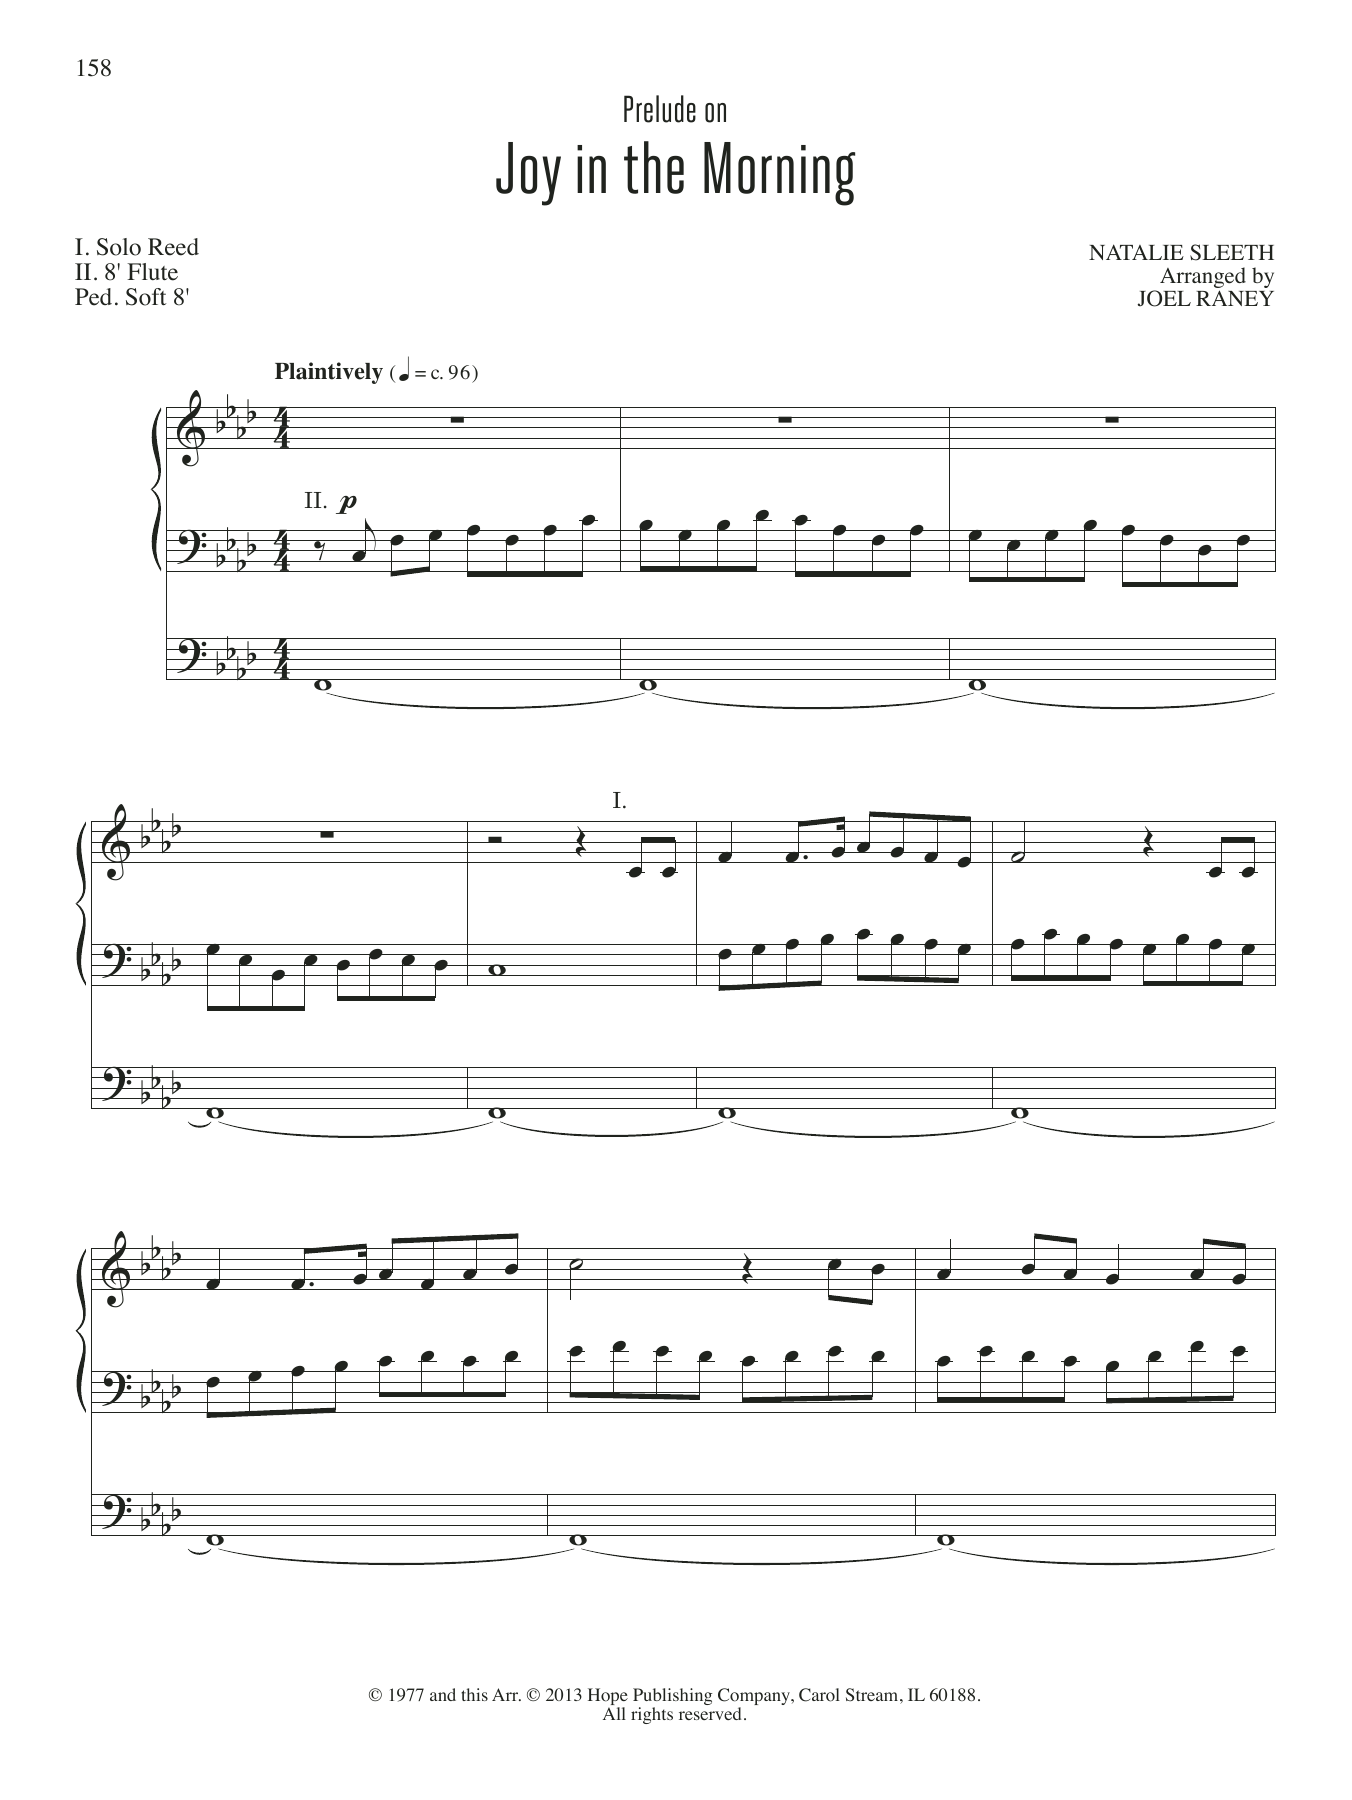 JOEL RAYNEY Joy in the Morning Sheet Music Notes & Chords for Organ - Download or Print PDF